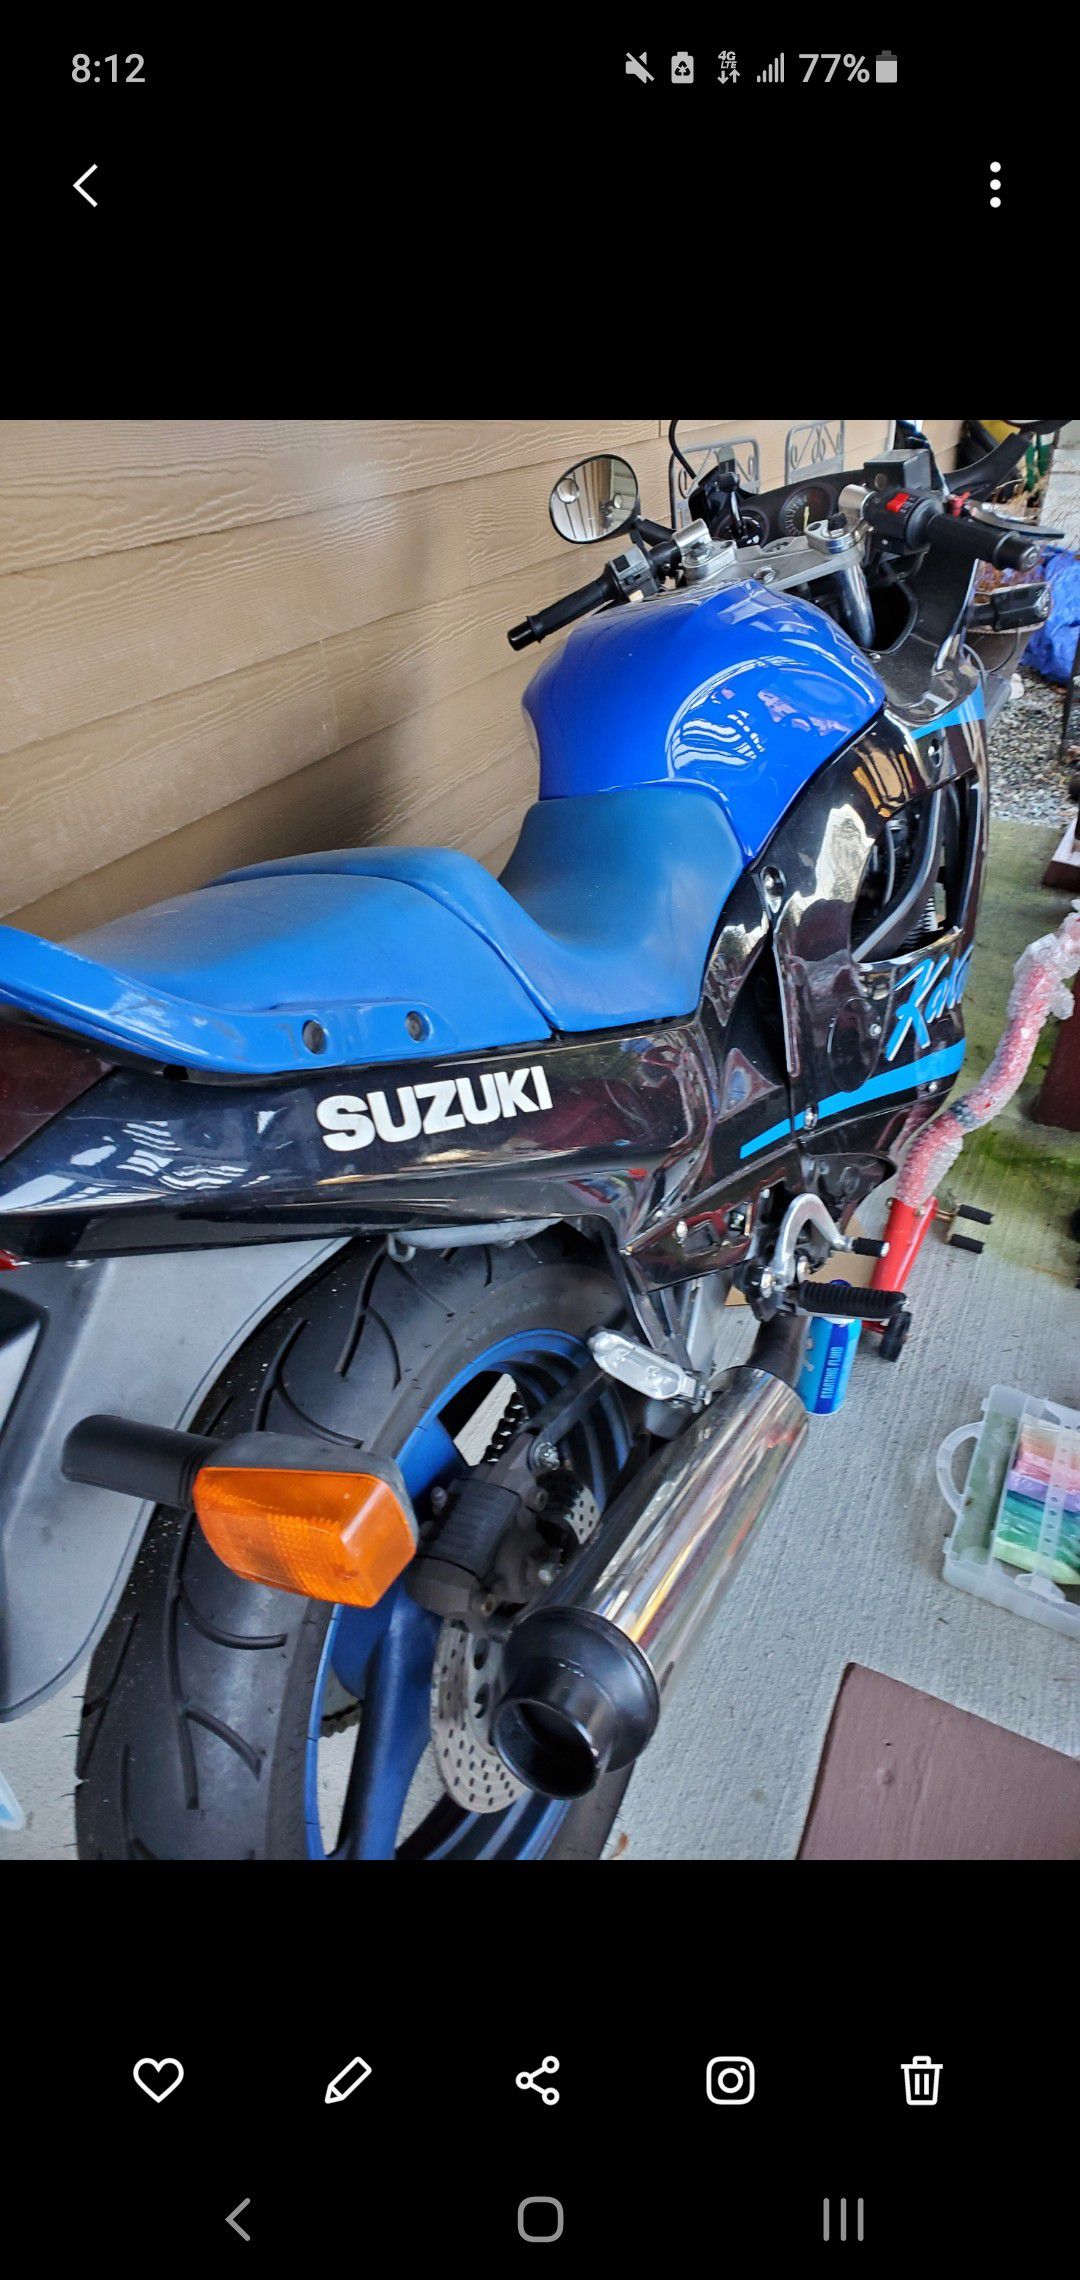 Suzuki 89 motorcycle katana 600 collector vehicle new tires stands